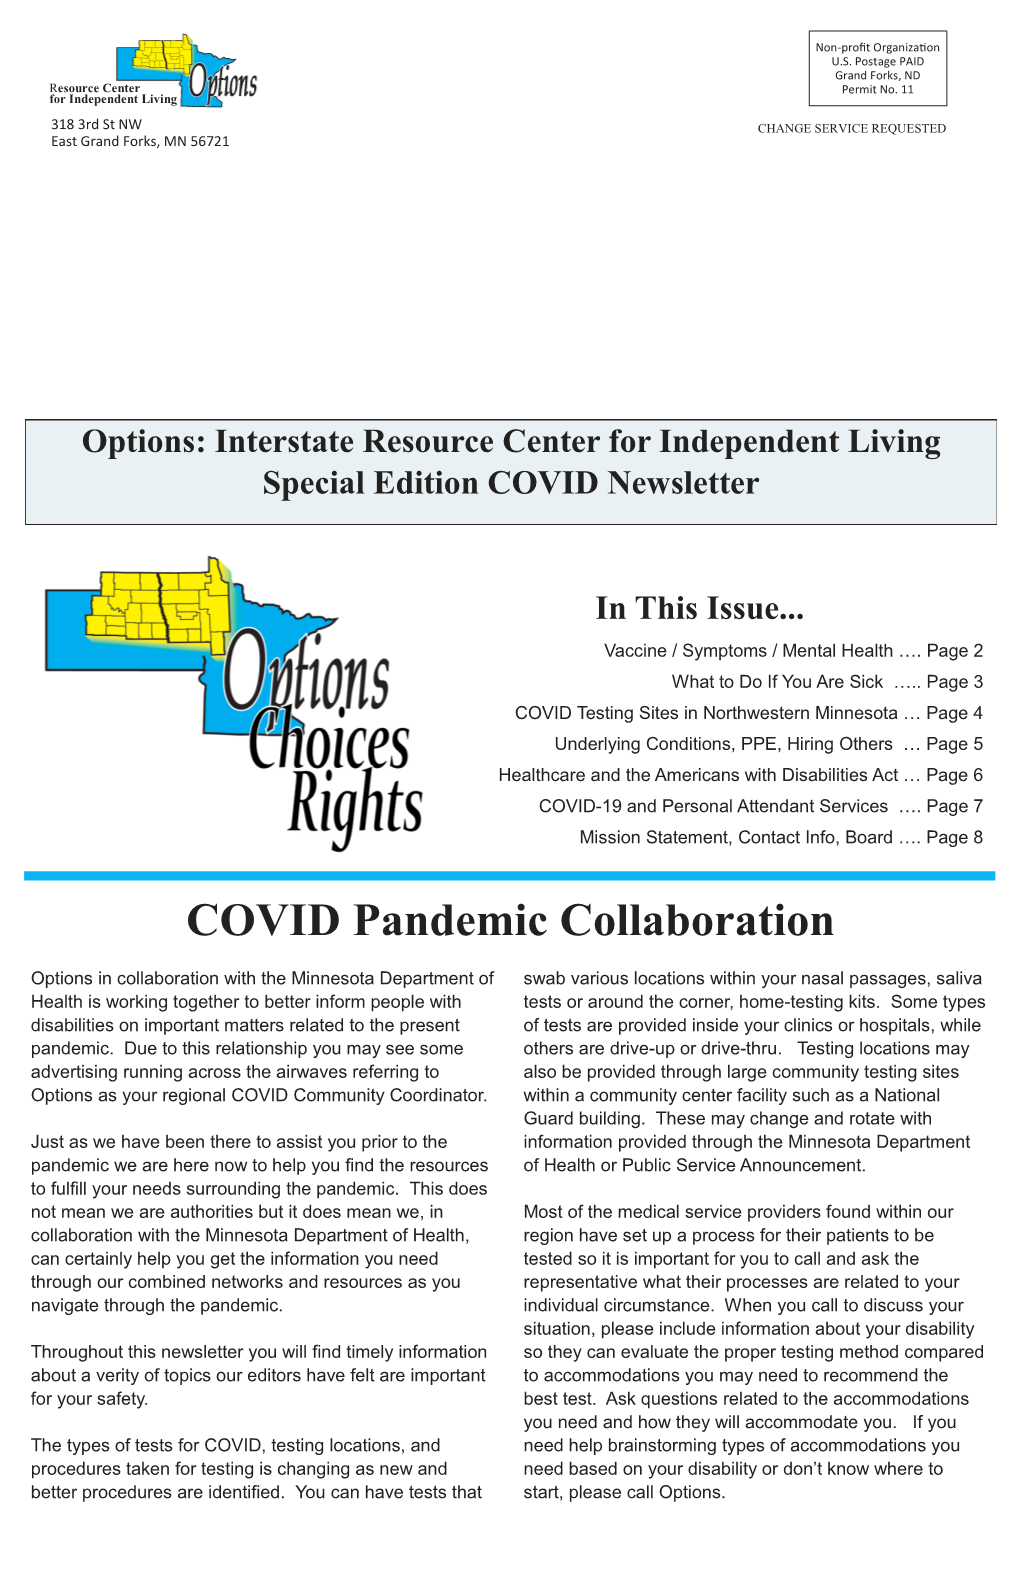 COVID Pandemic Collaboration